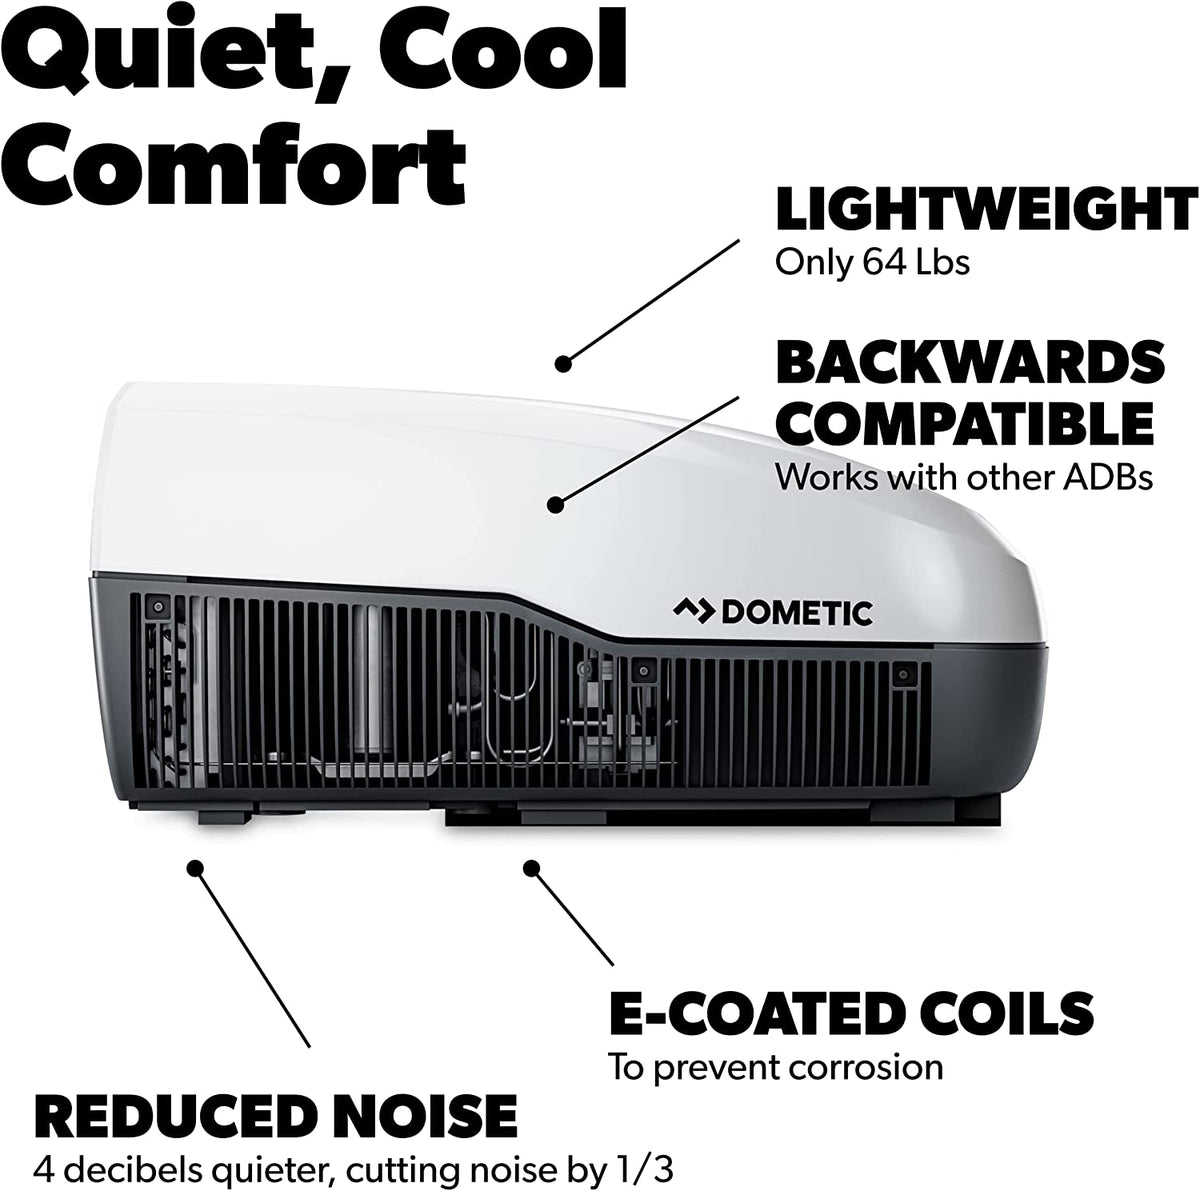 Dometic FreshJet 3 Series - 13.5k BTU Air Conditioner - White - FJX3473MWHAS